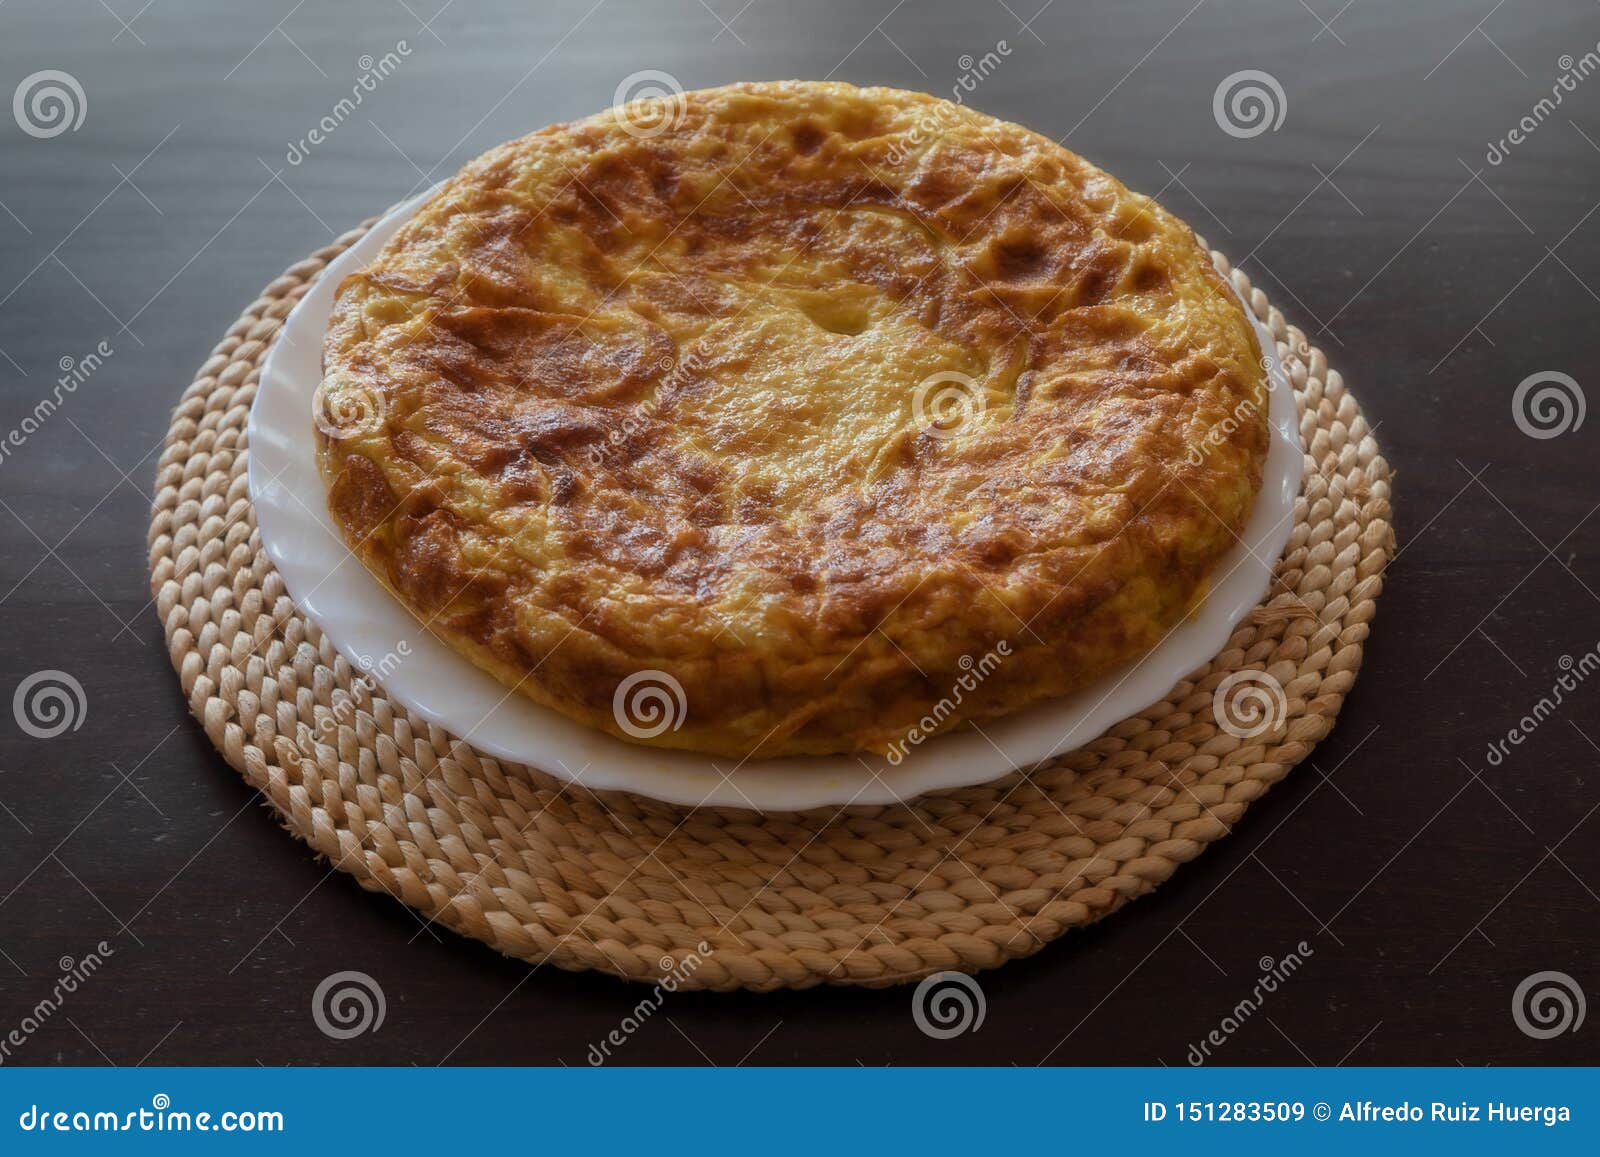 spanish omelet, tortilla de patata